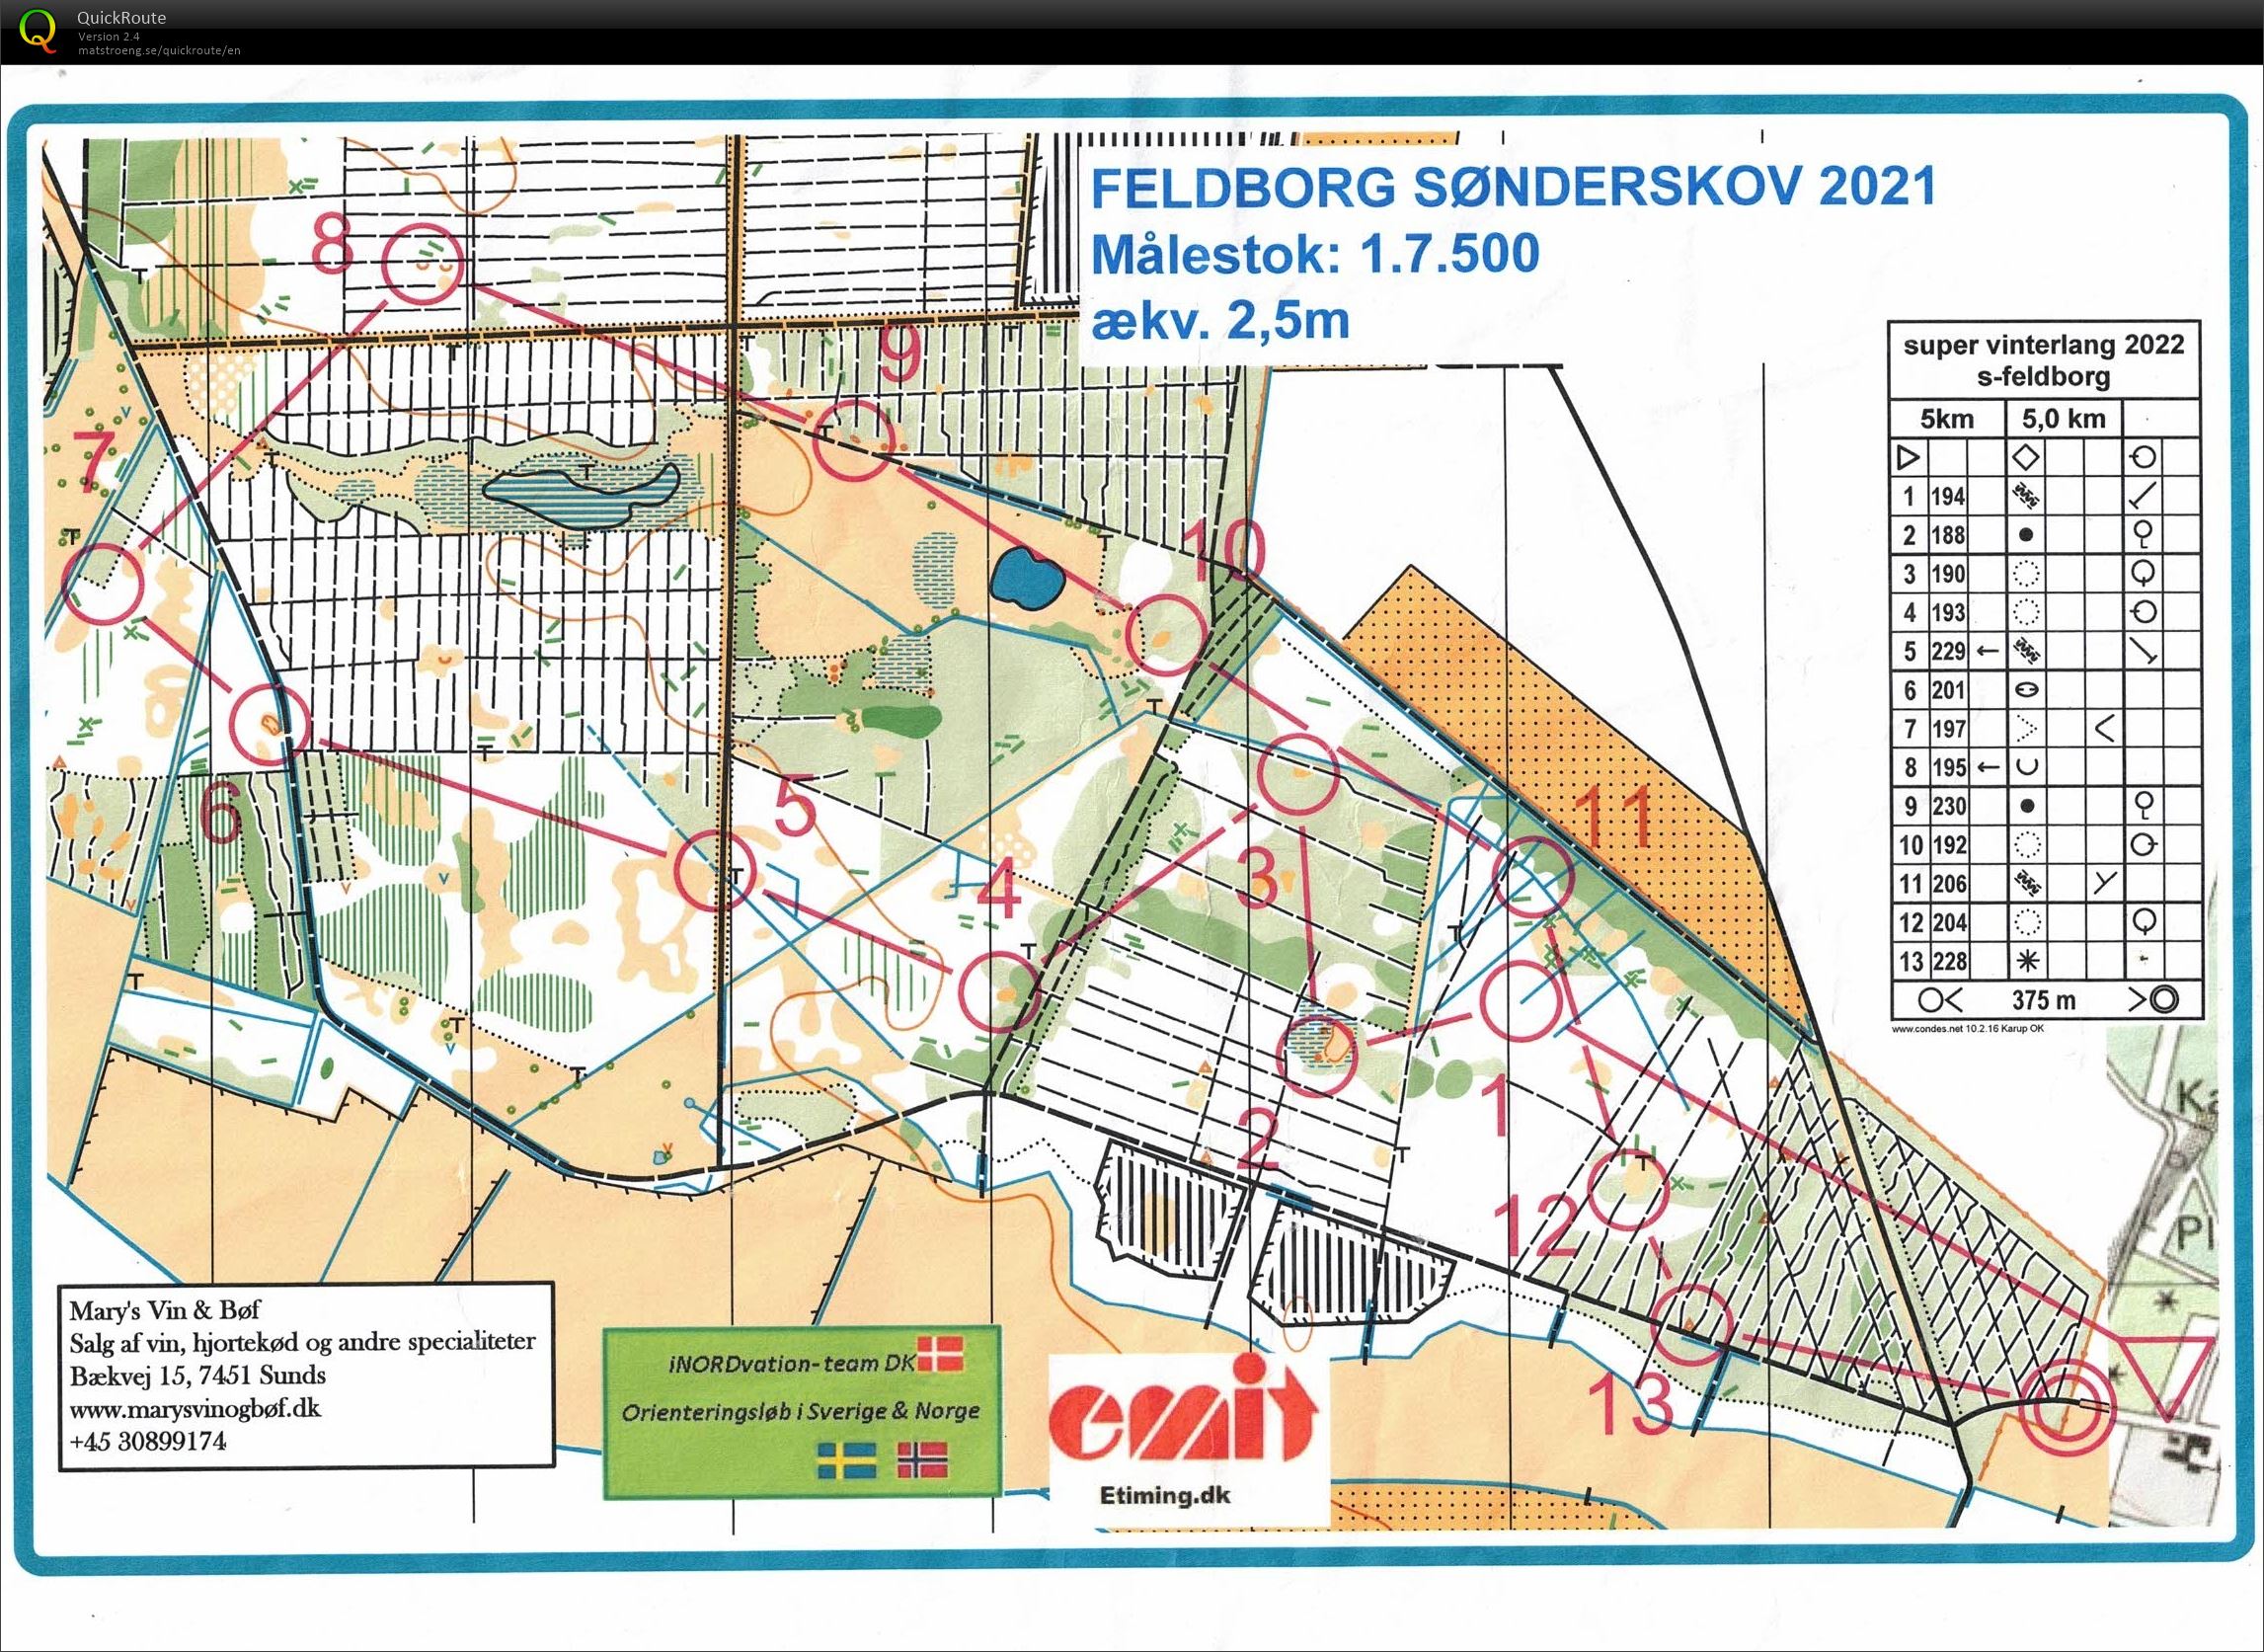 Feldborg Sønderskov, Super Langdistance 2, Bane 5 km, Pia Gade, 020122 (02-01-2022)